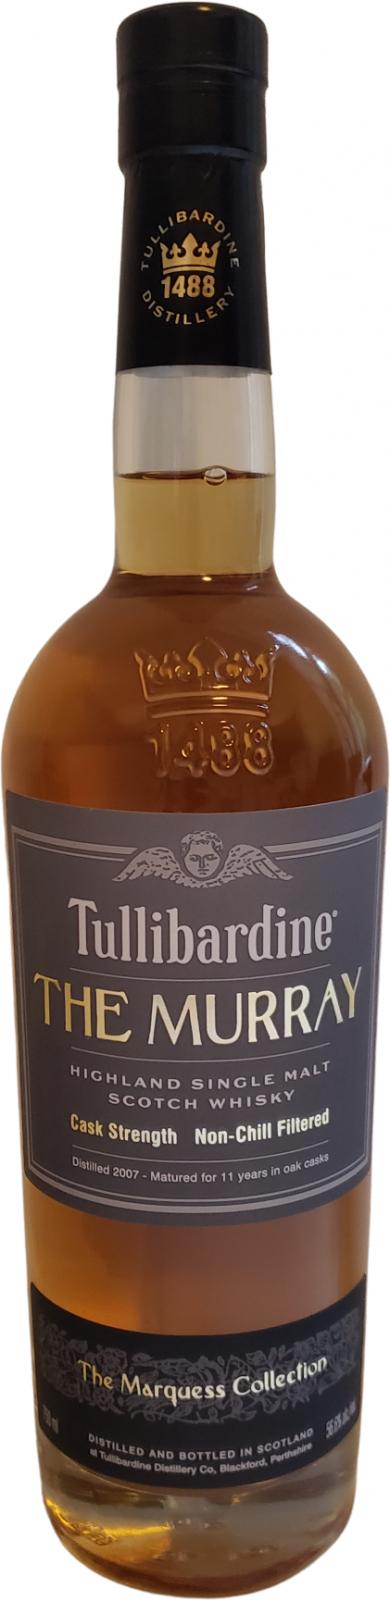 Tullibardine 2007 The Murray 1st Fill Bourbon Casks 46.6% 750ml